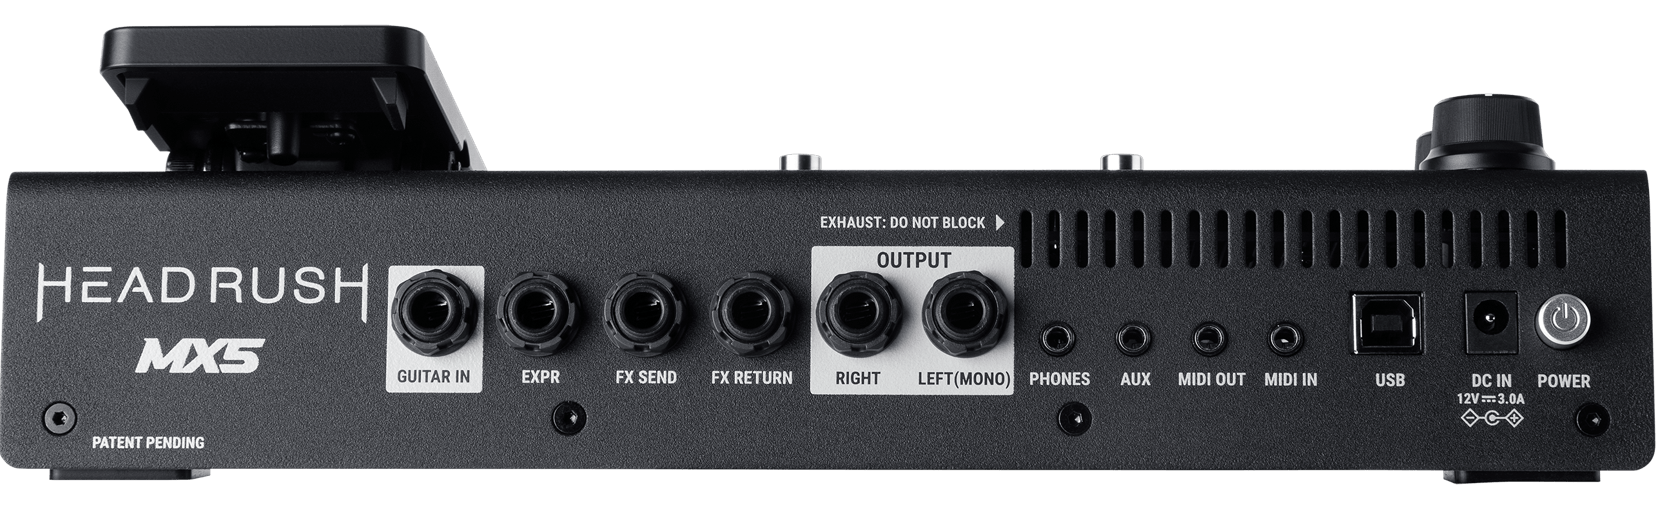 Ultra-Portable Amp Modeling Guitar Effect Processor – MX5